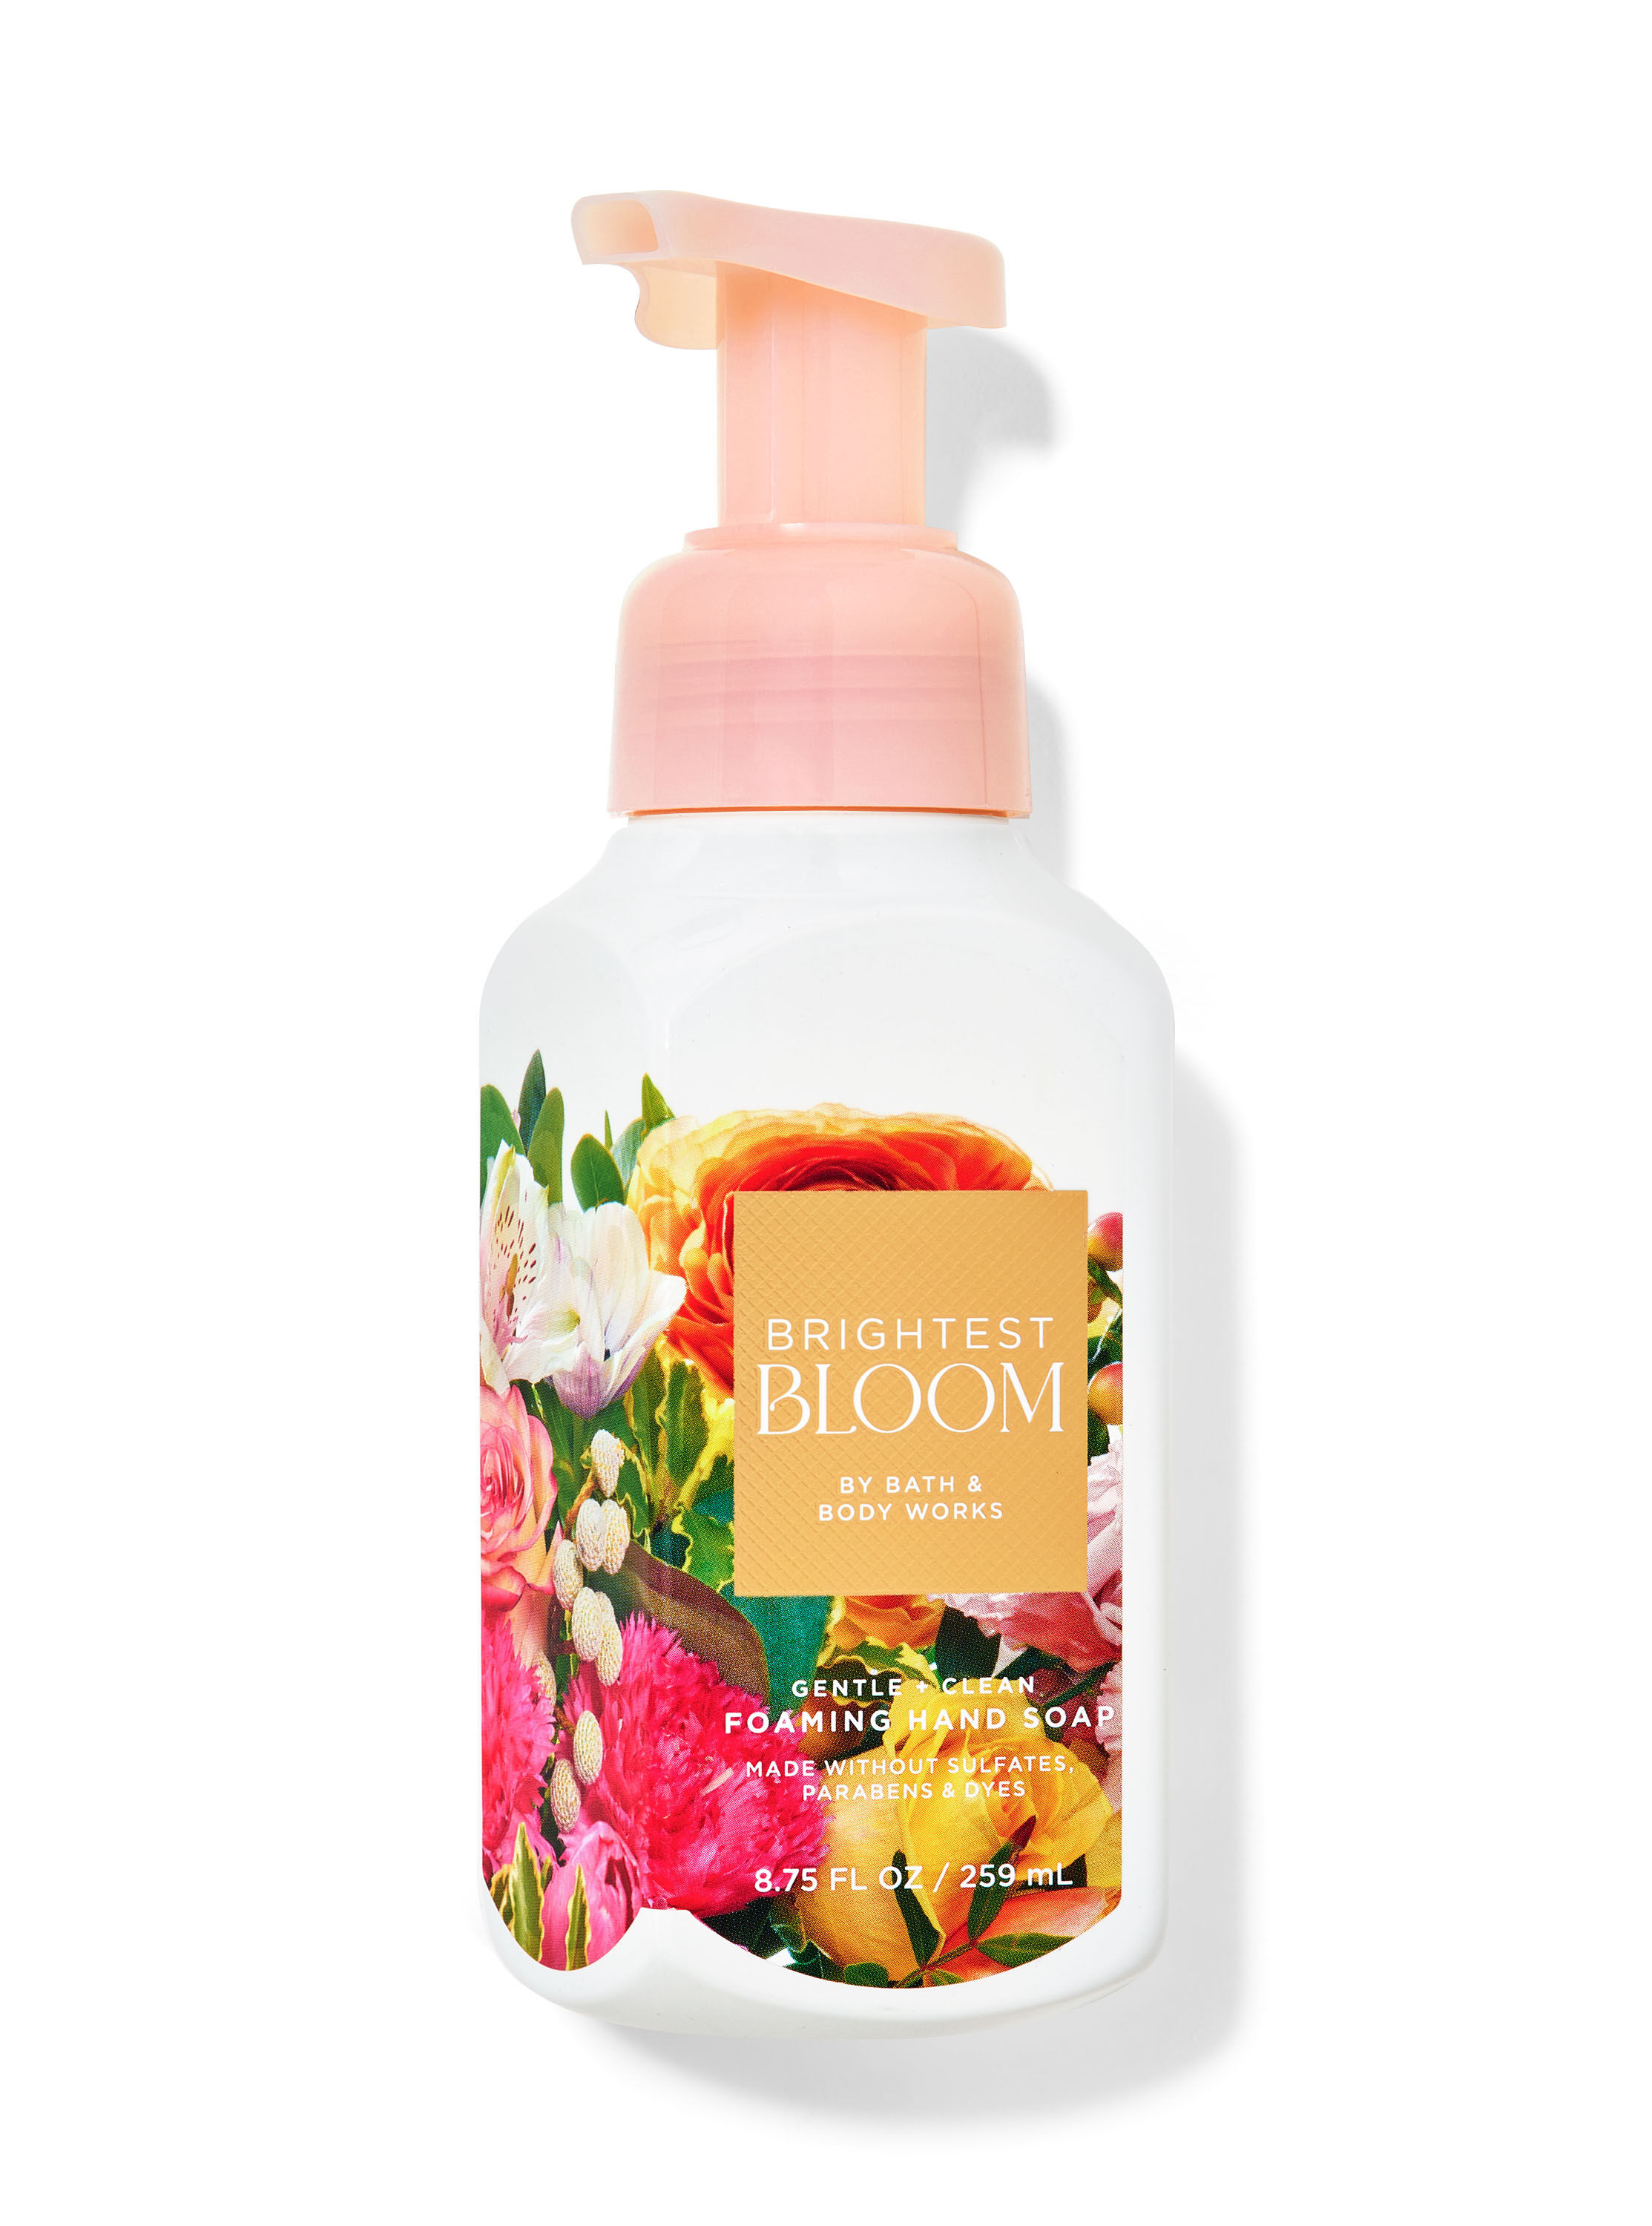 Brightest Bloom Gentle & Clean Foaming Hand Soap